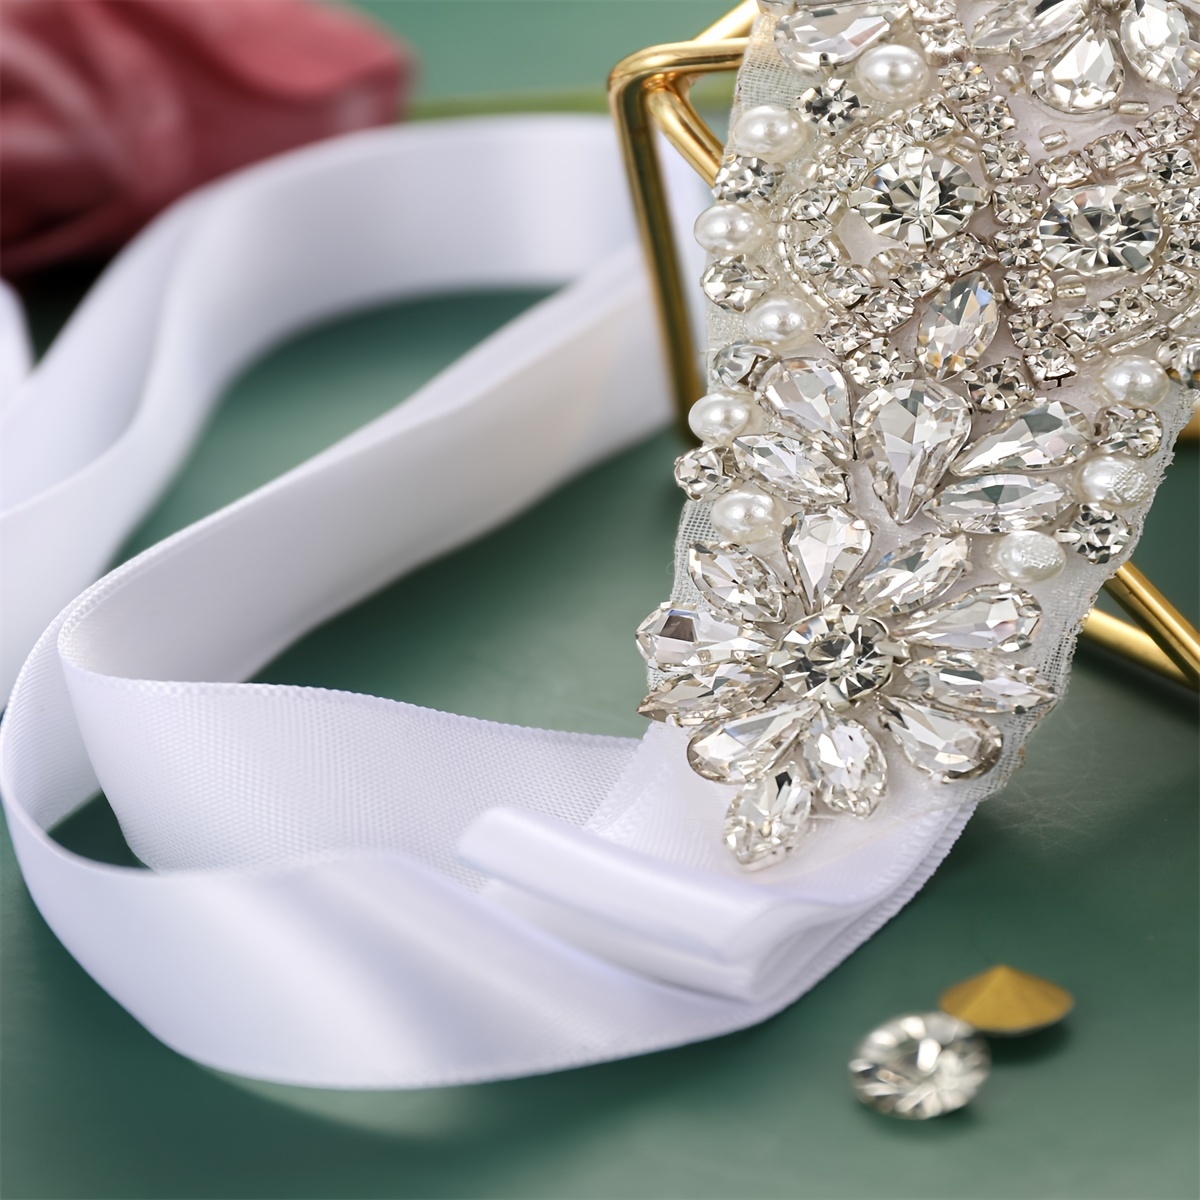 Wedding Accessories - Wedding Silver Crystal and Pearls Belt/Sash